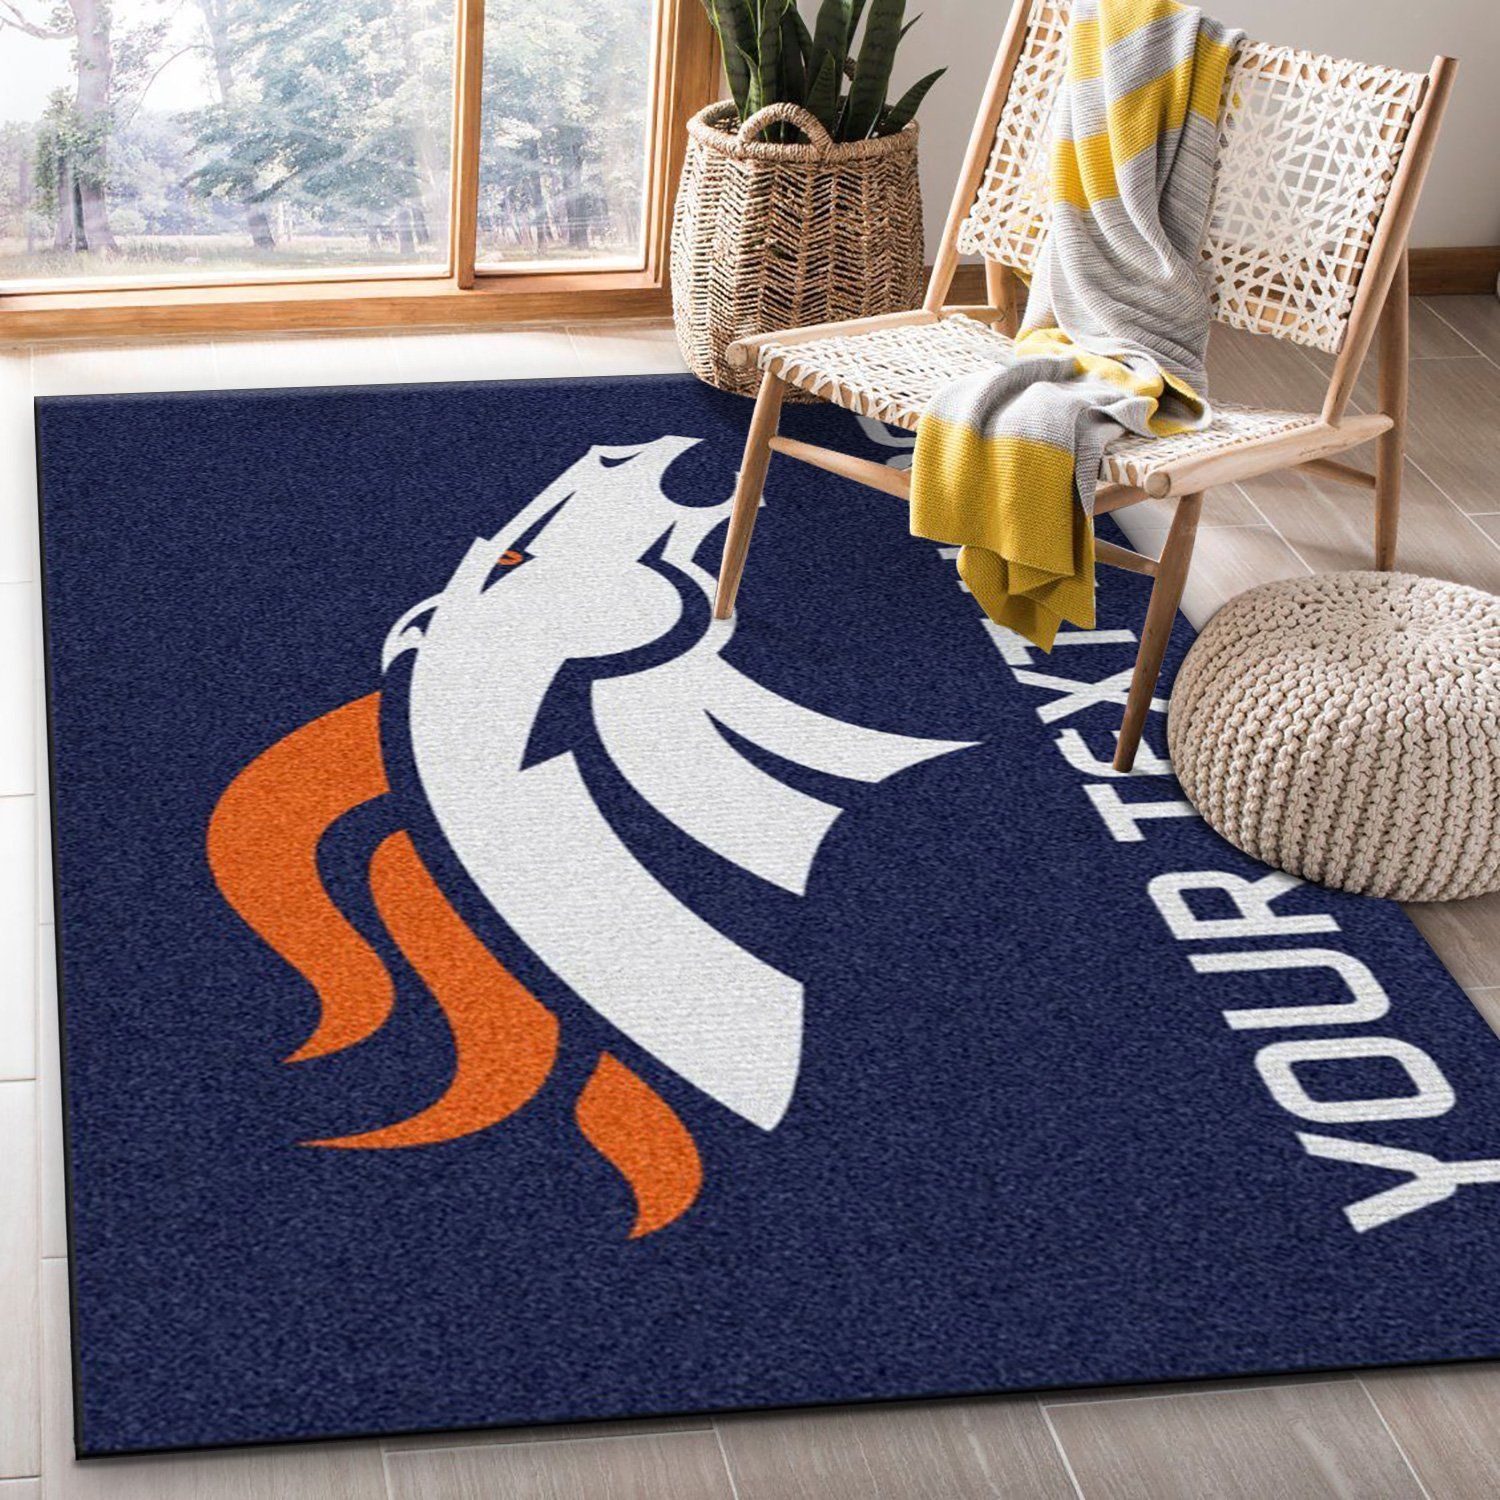 Customizable Denver Broncos Personalized Accent Rug NFL Area Rug Carpet